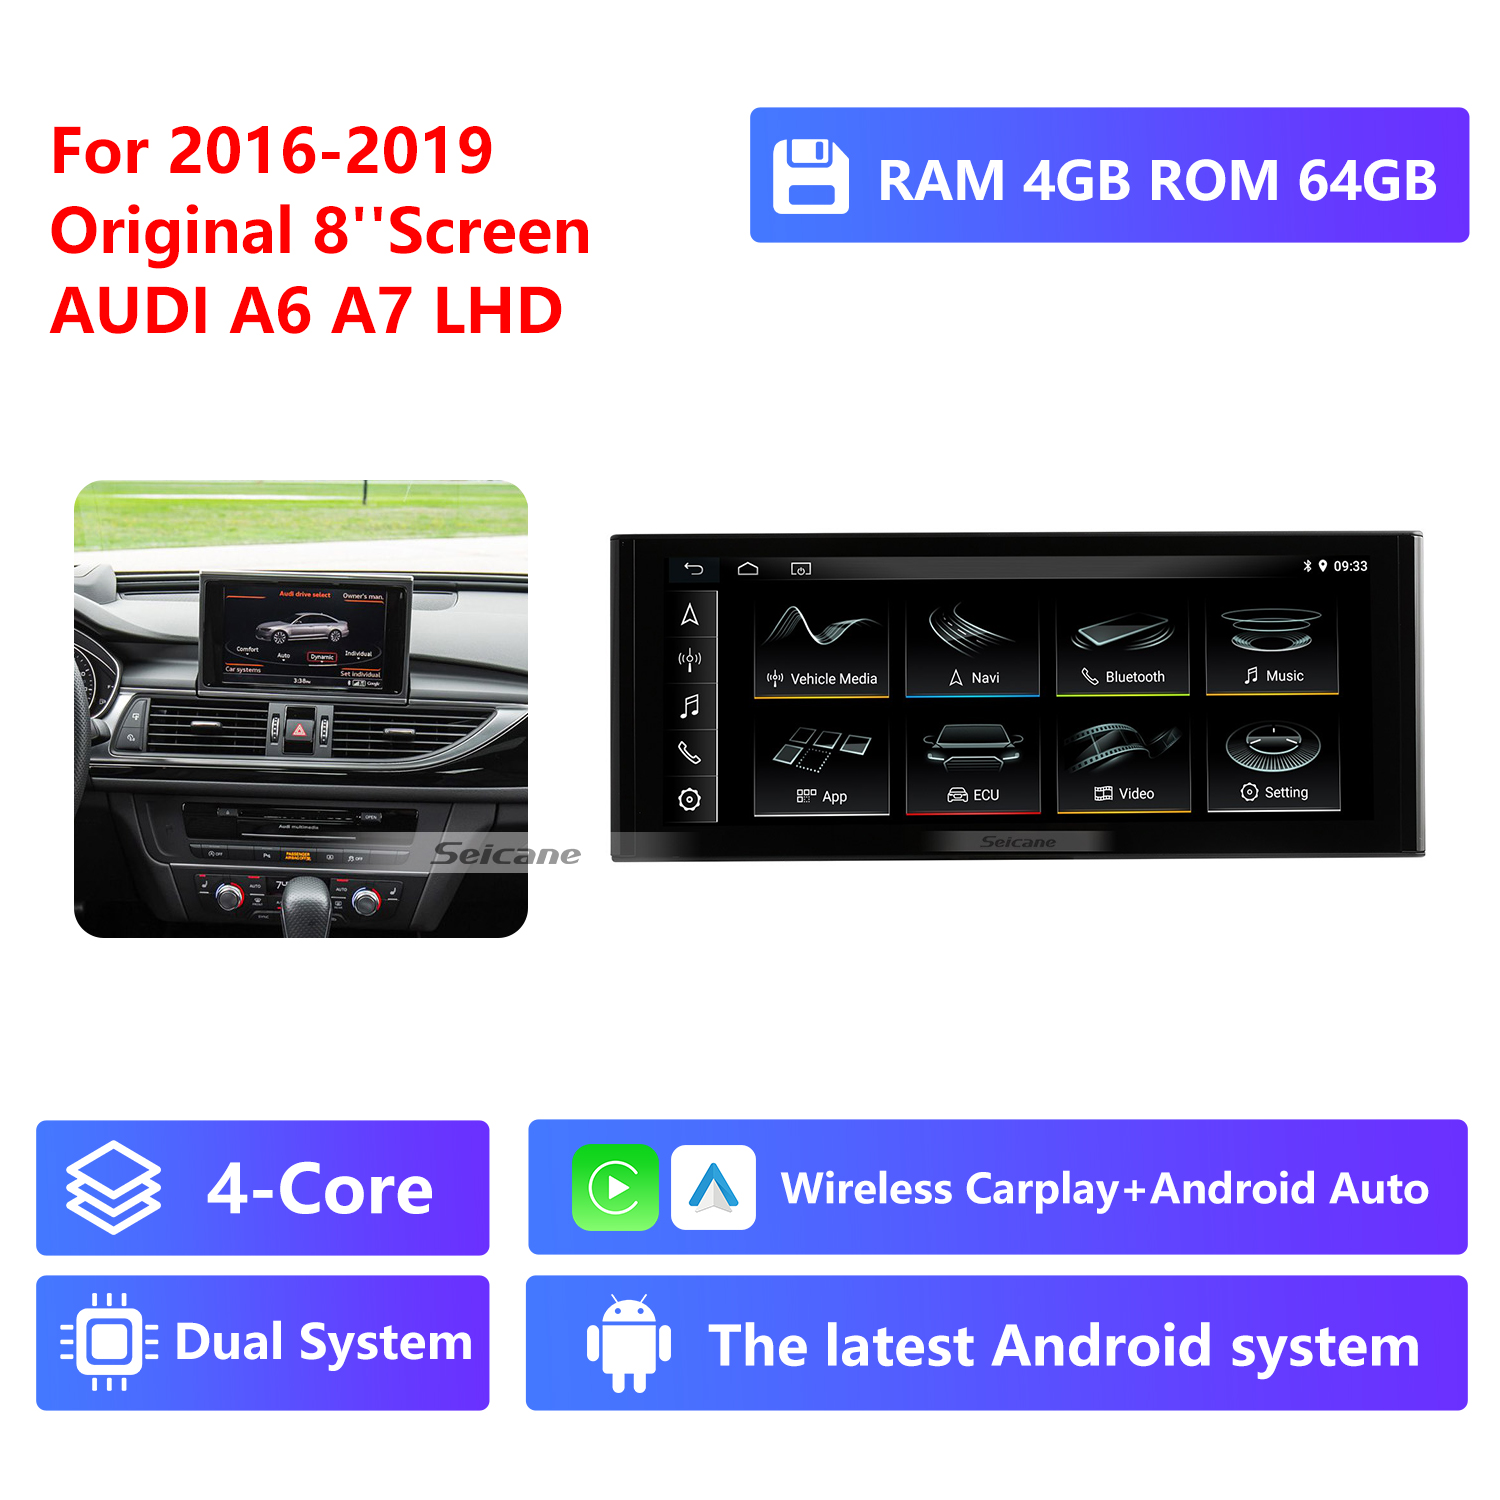 4-Core RAM 4G ROM 64G,2016-2019, Original 8"Screen,LHD